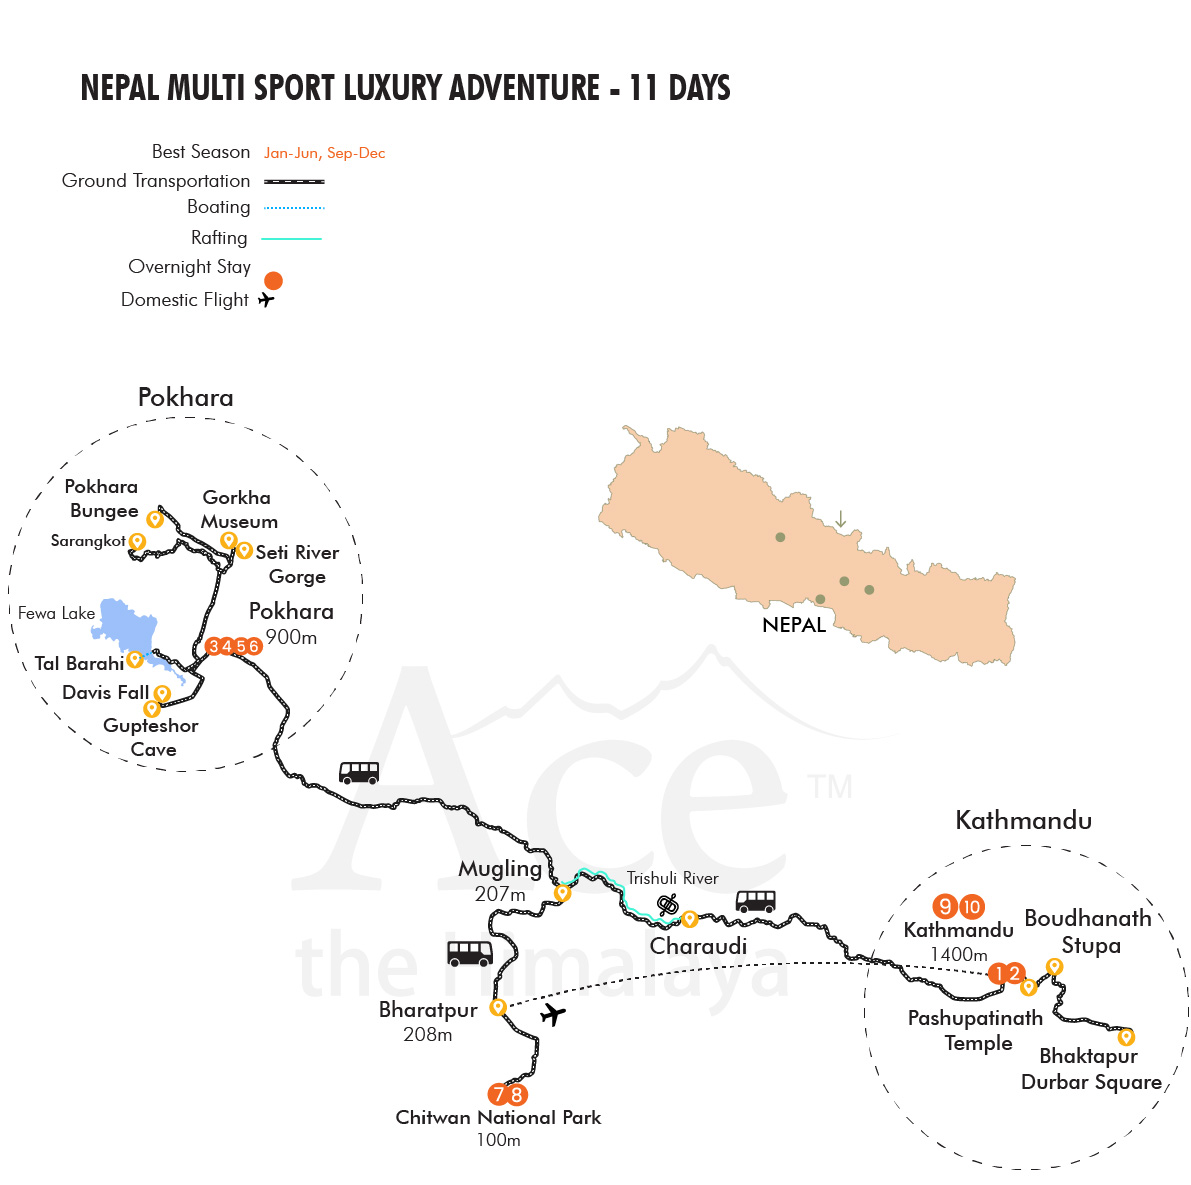 Nepal Multi Sport Luxury Adventure